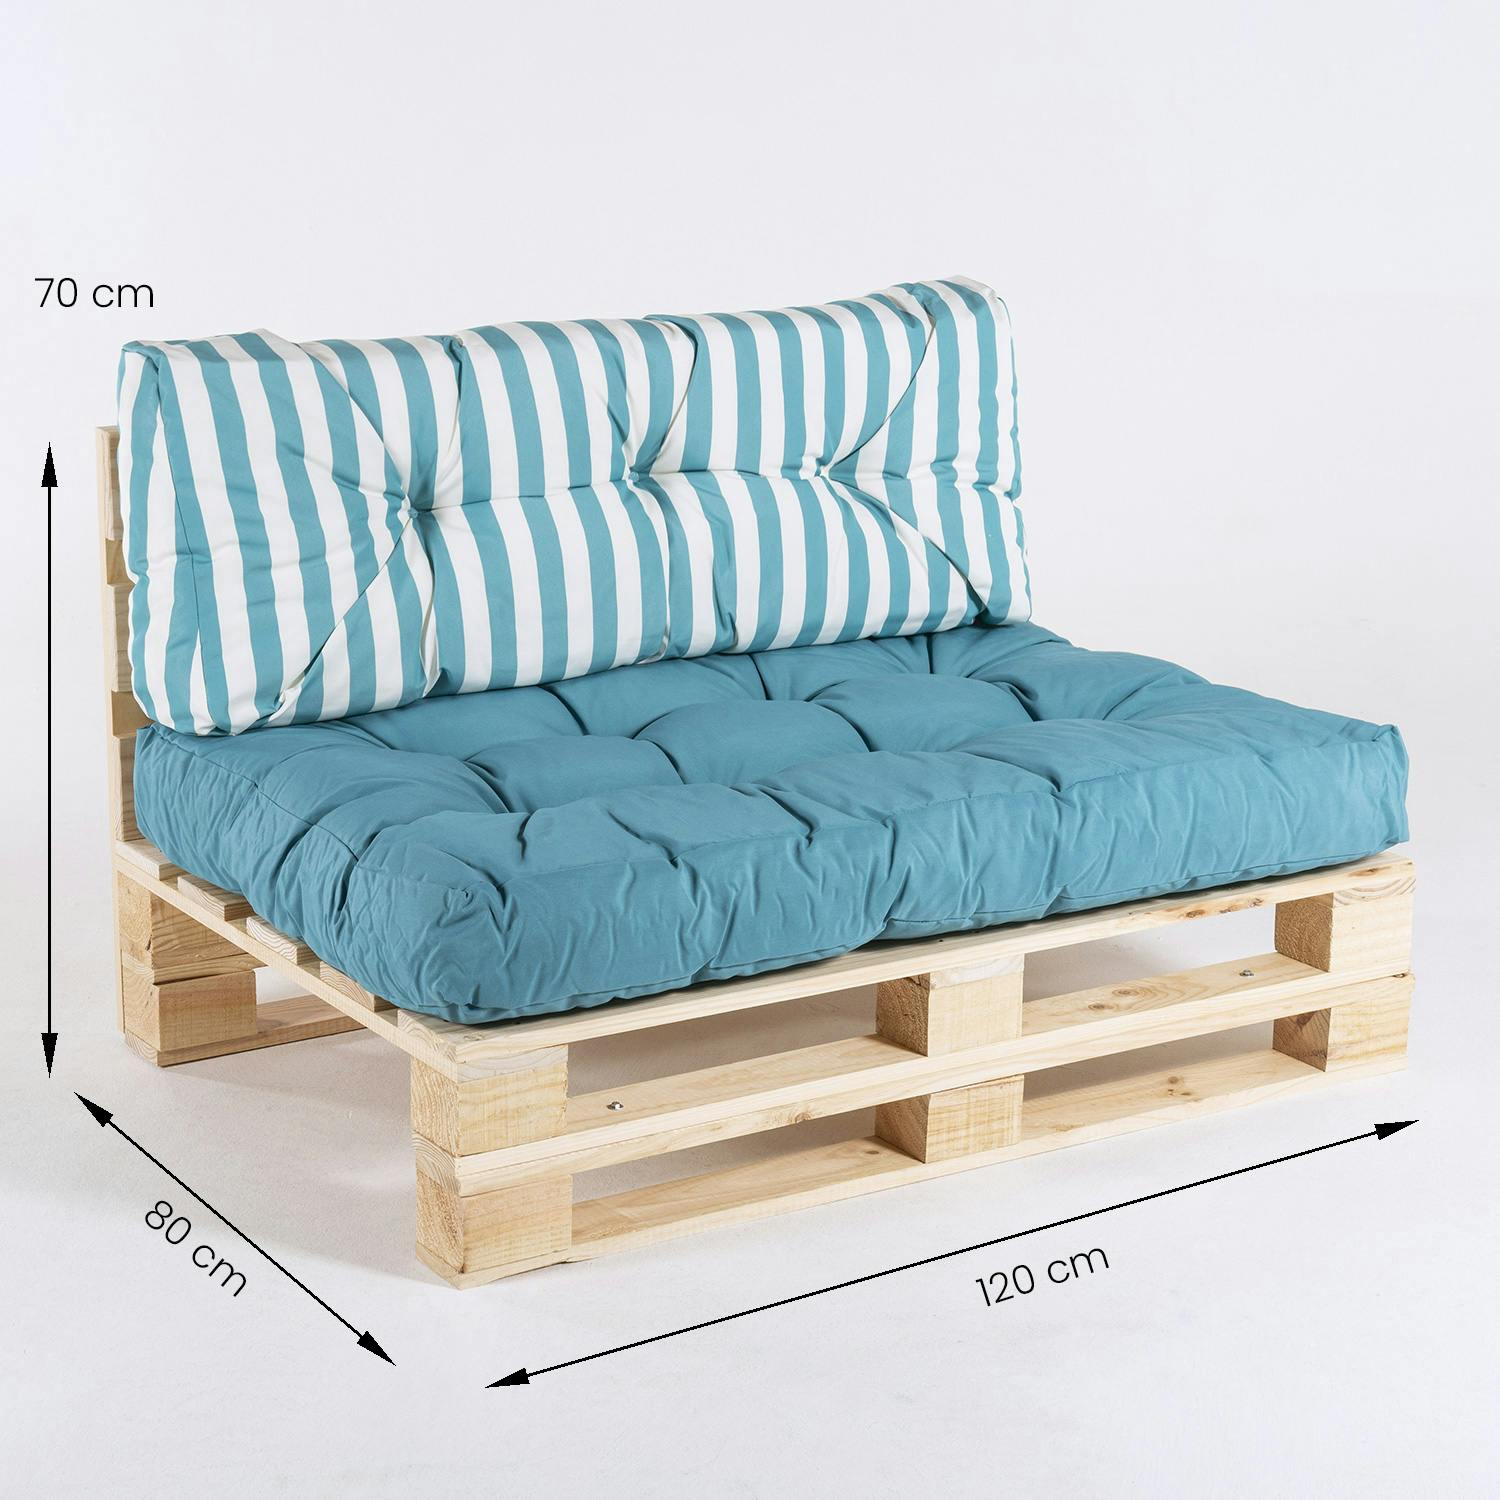 Sofá de palet + cojín de asiento 80x120x16 cm turquesa + cojín respaldo  42x120x16 cm rayas turquesa. Repelente al agua | MAKRO Marketplace